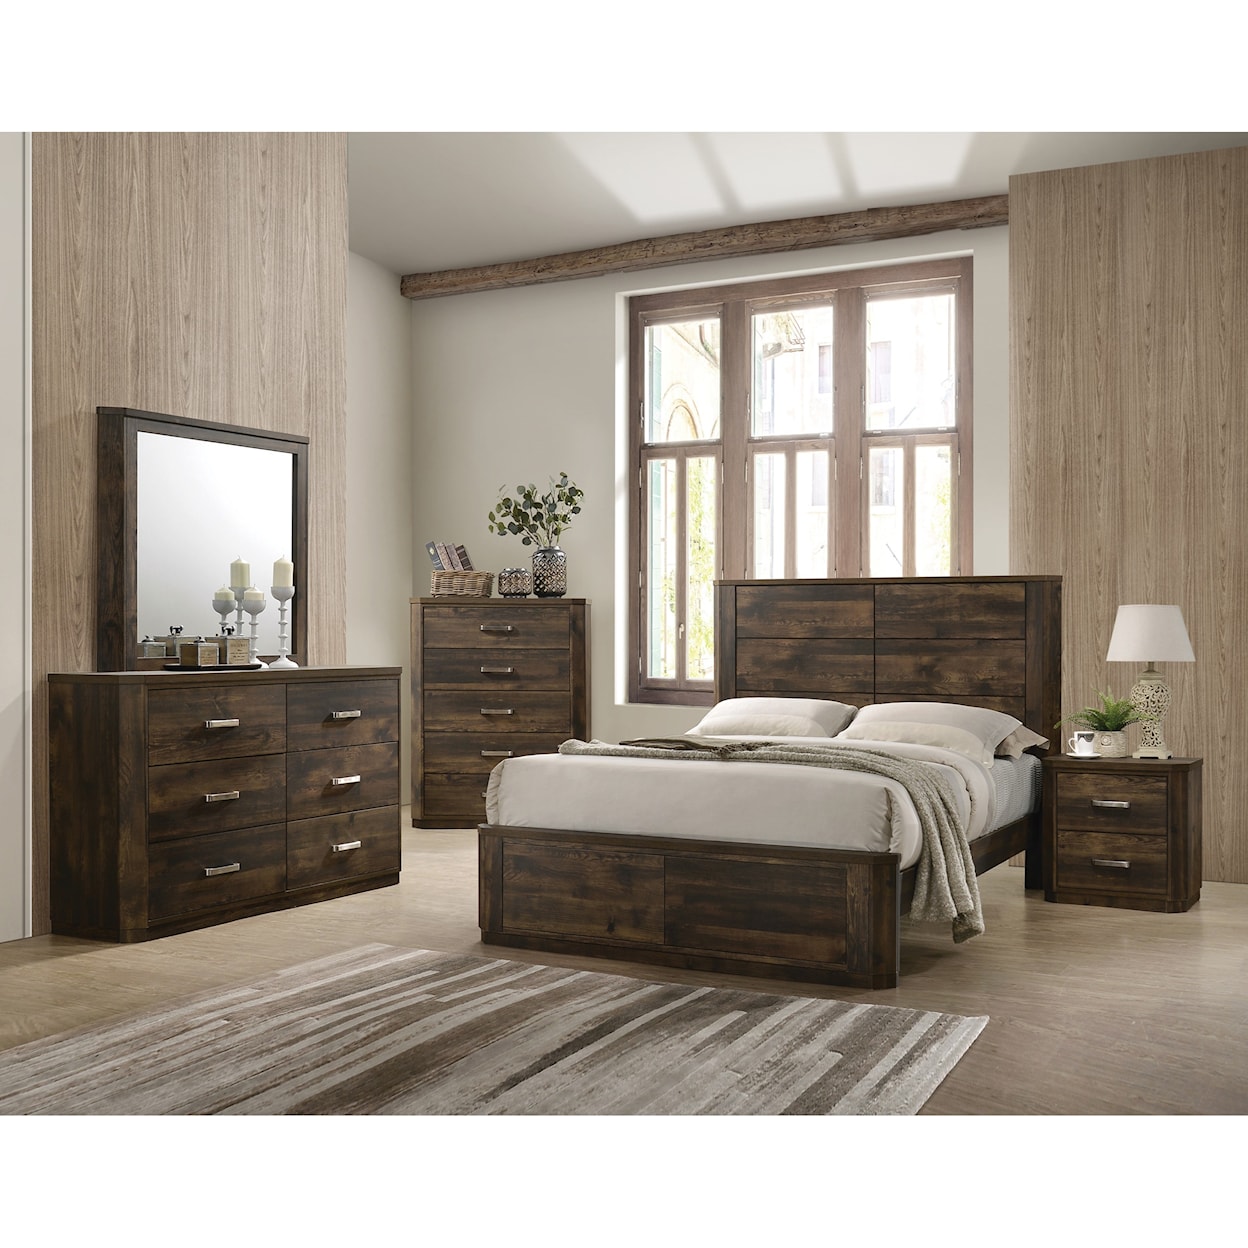 Acme Furniture Elettra King Bedroom Group